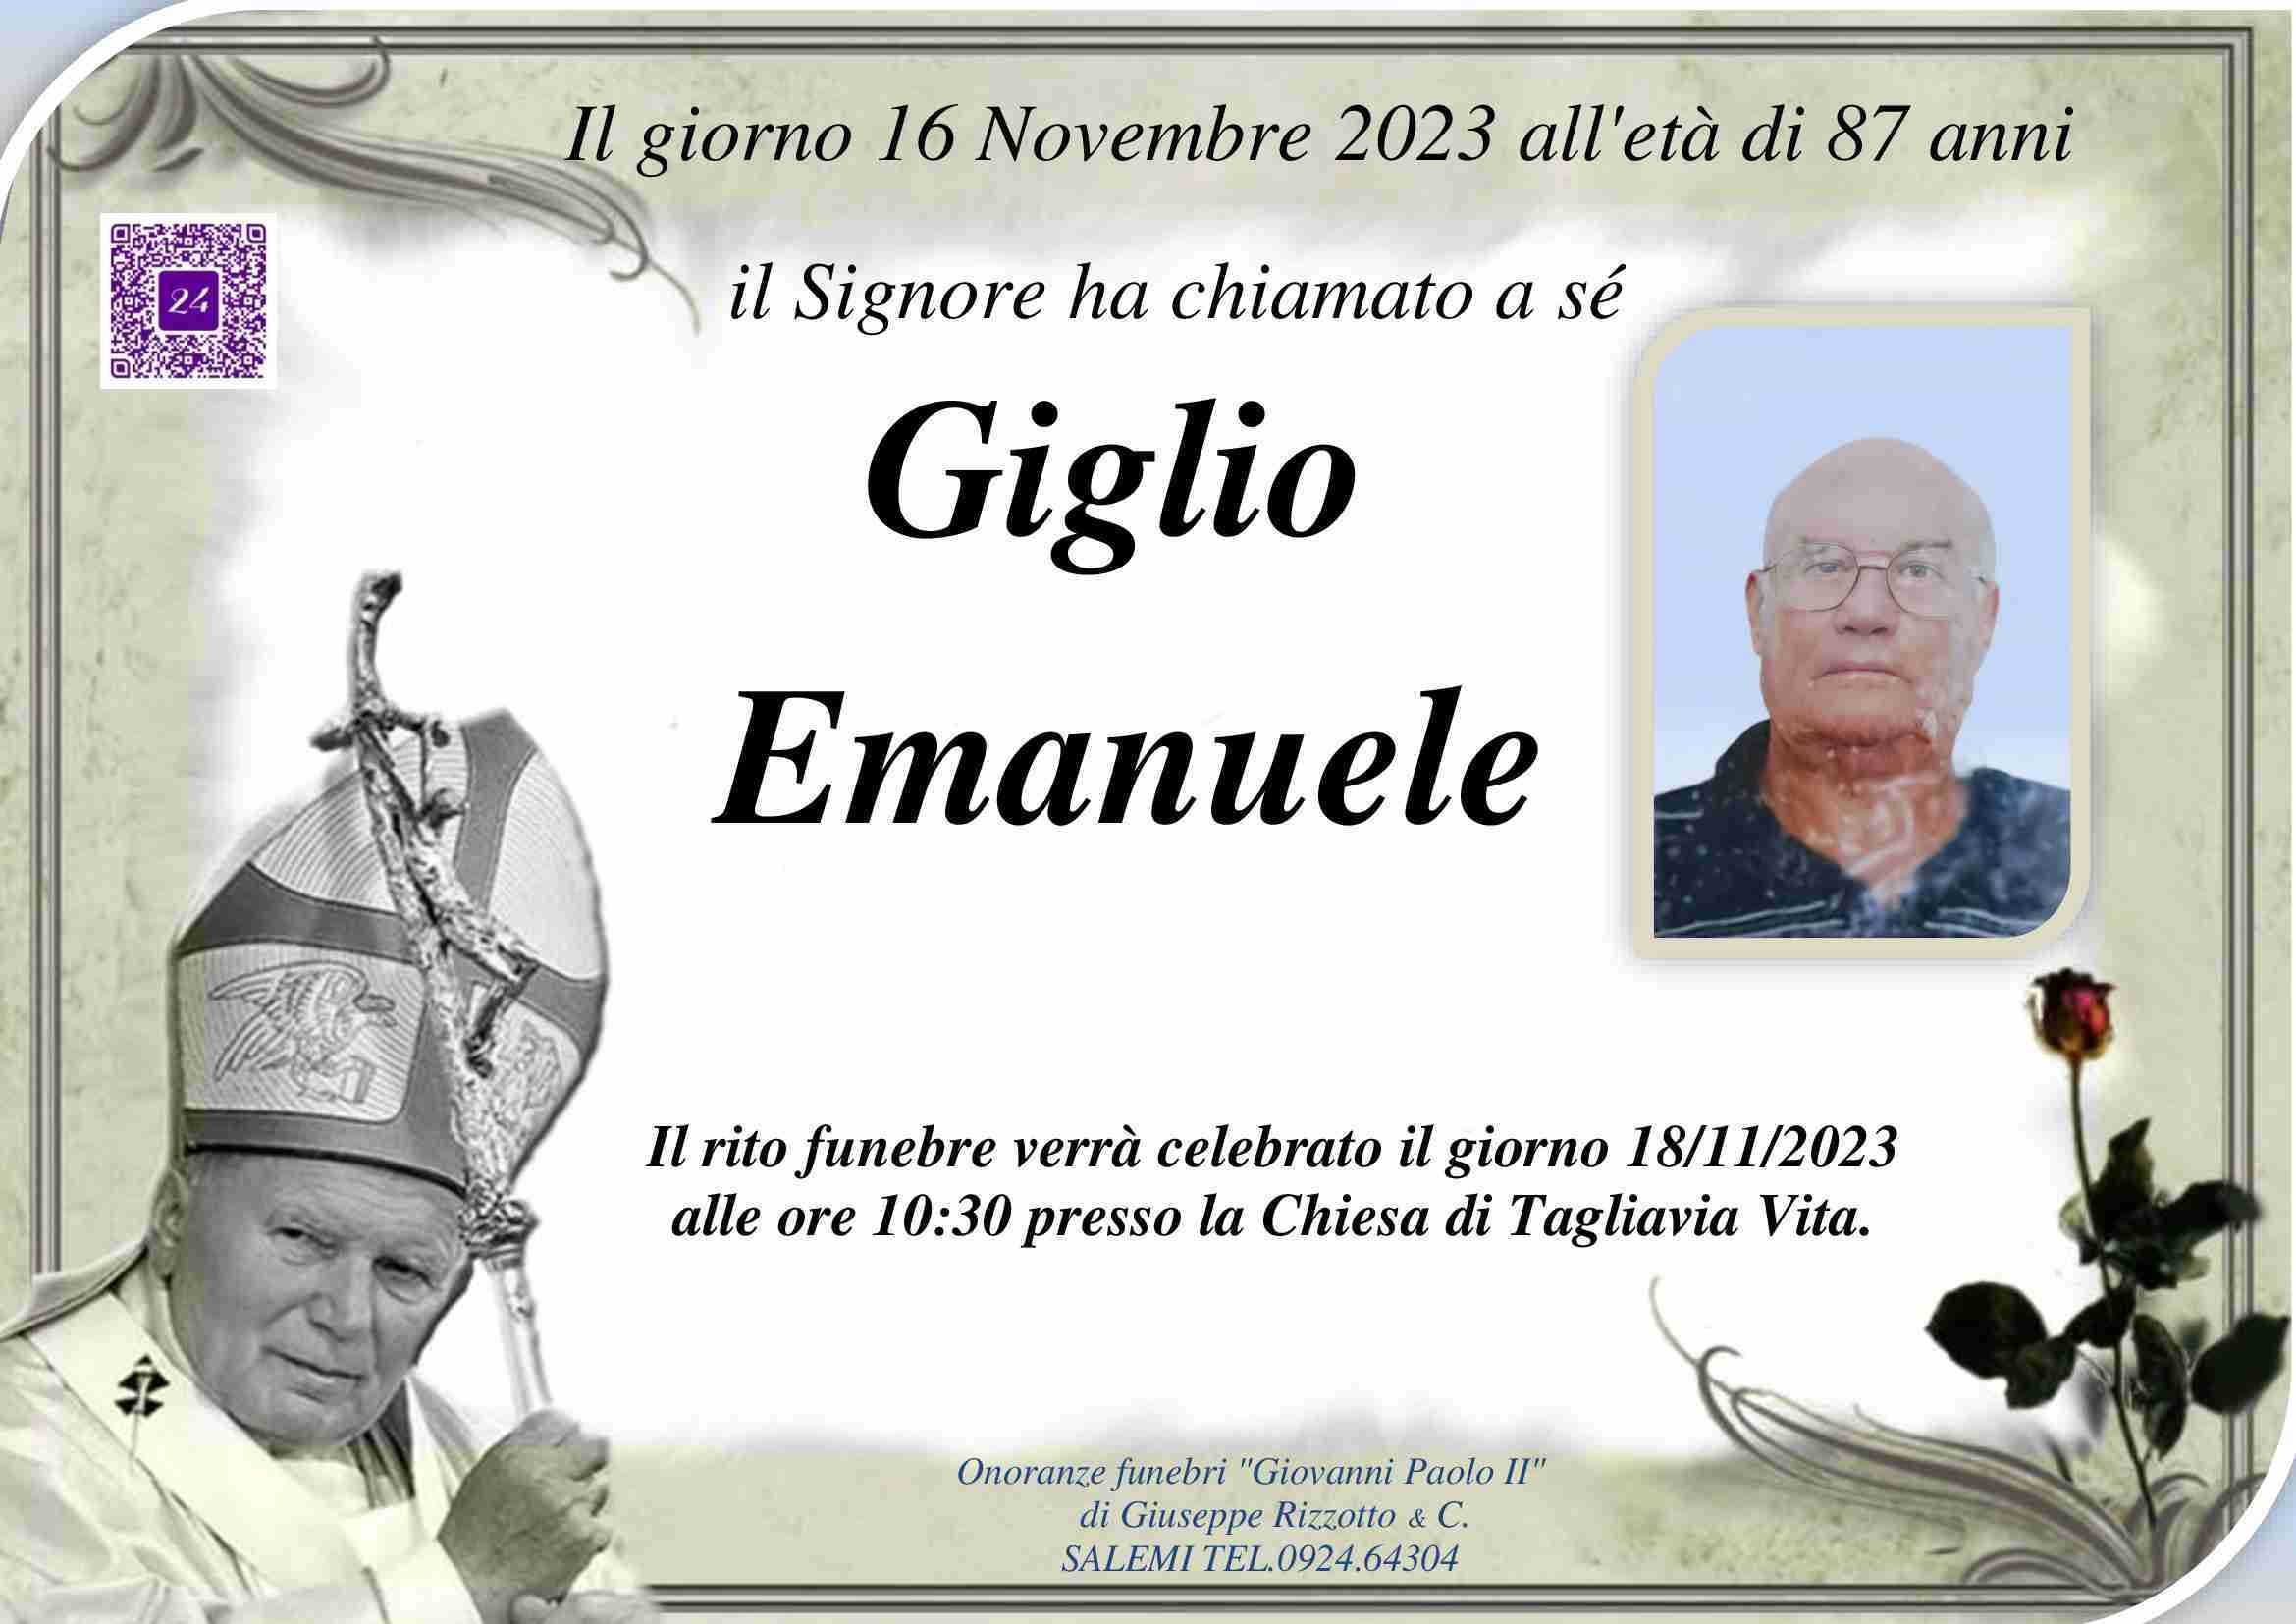 Emanuele Giglio